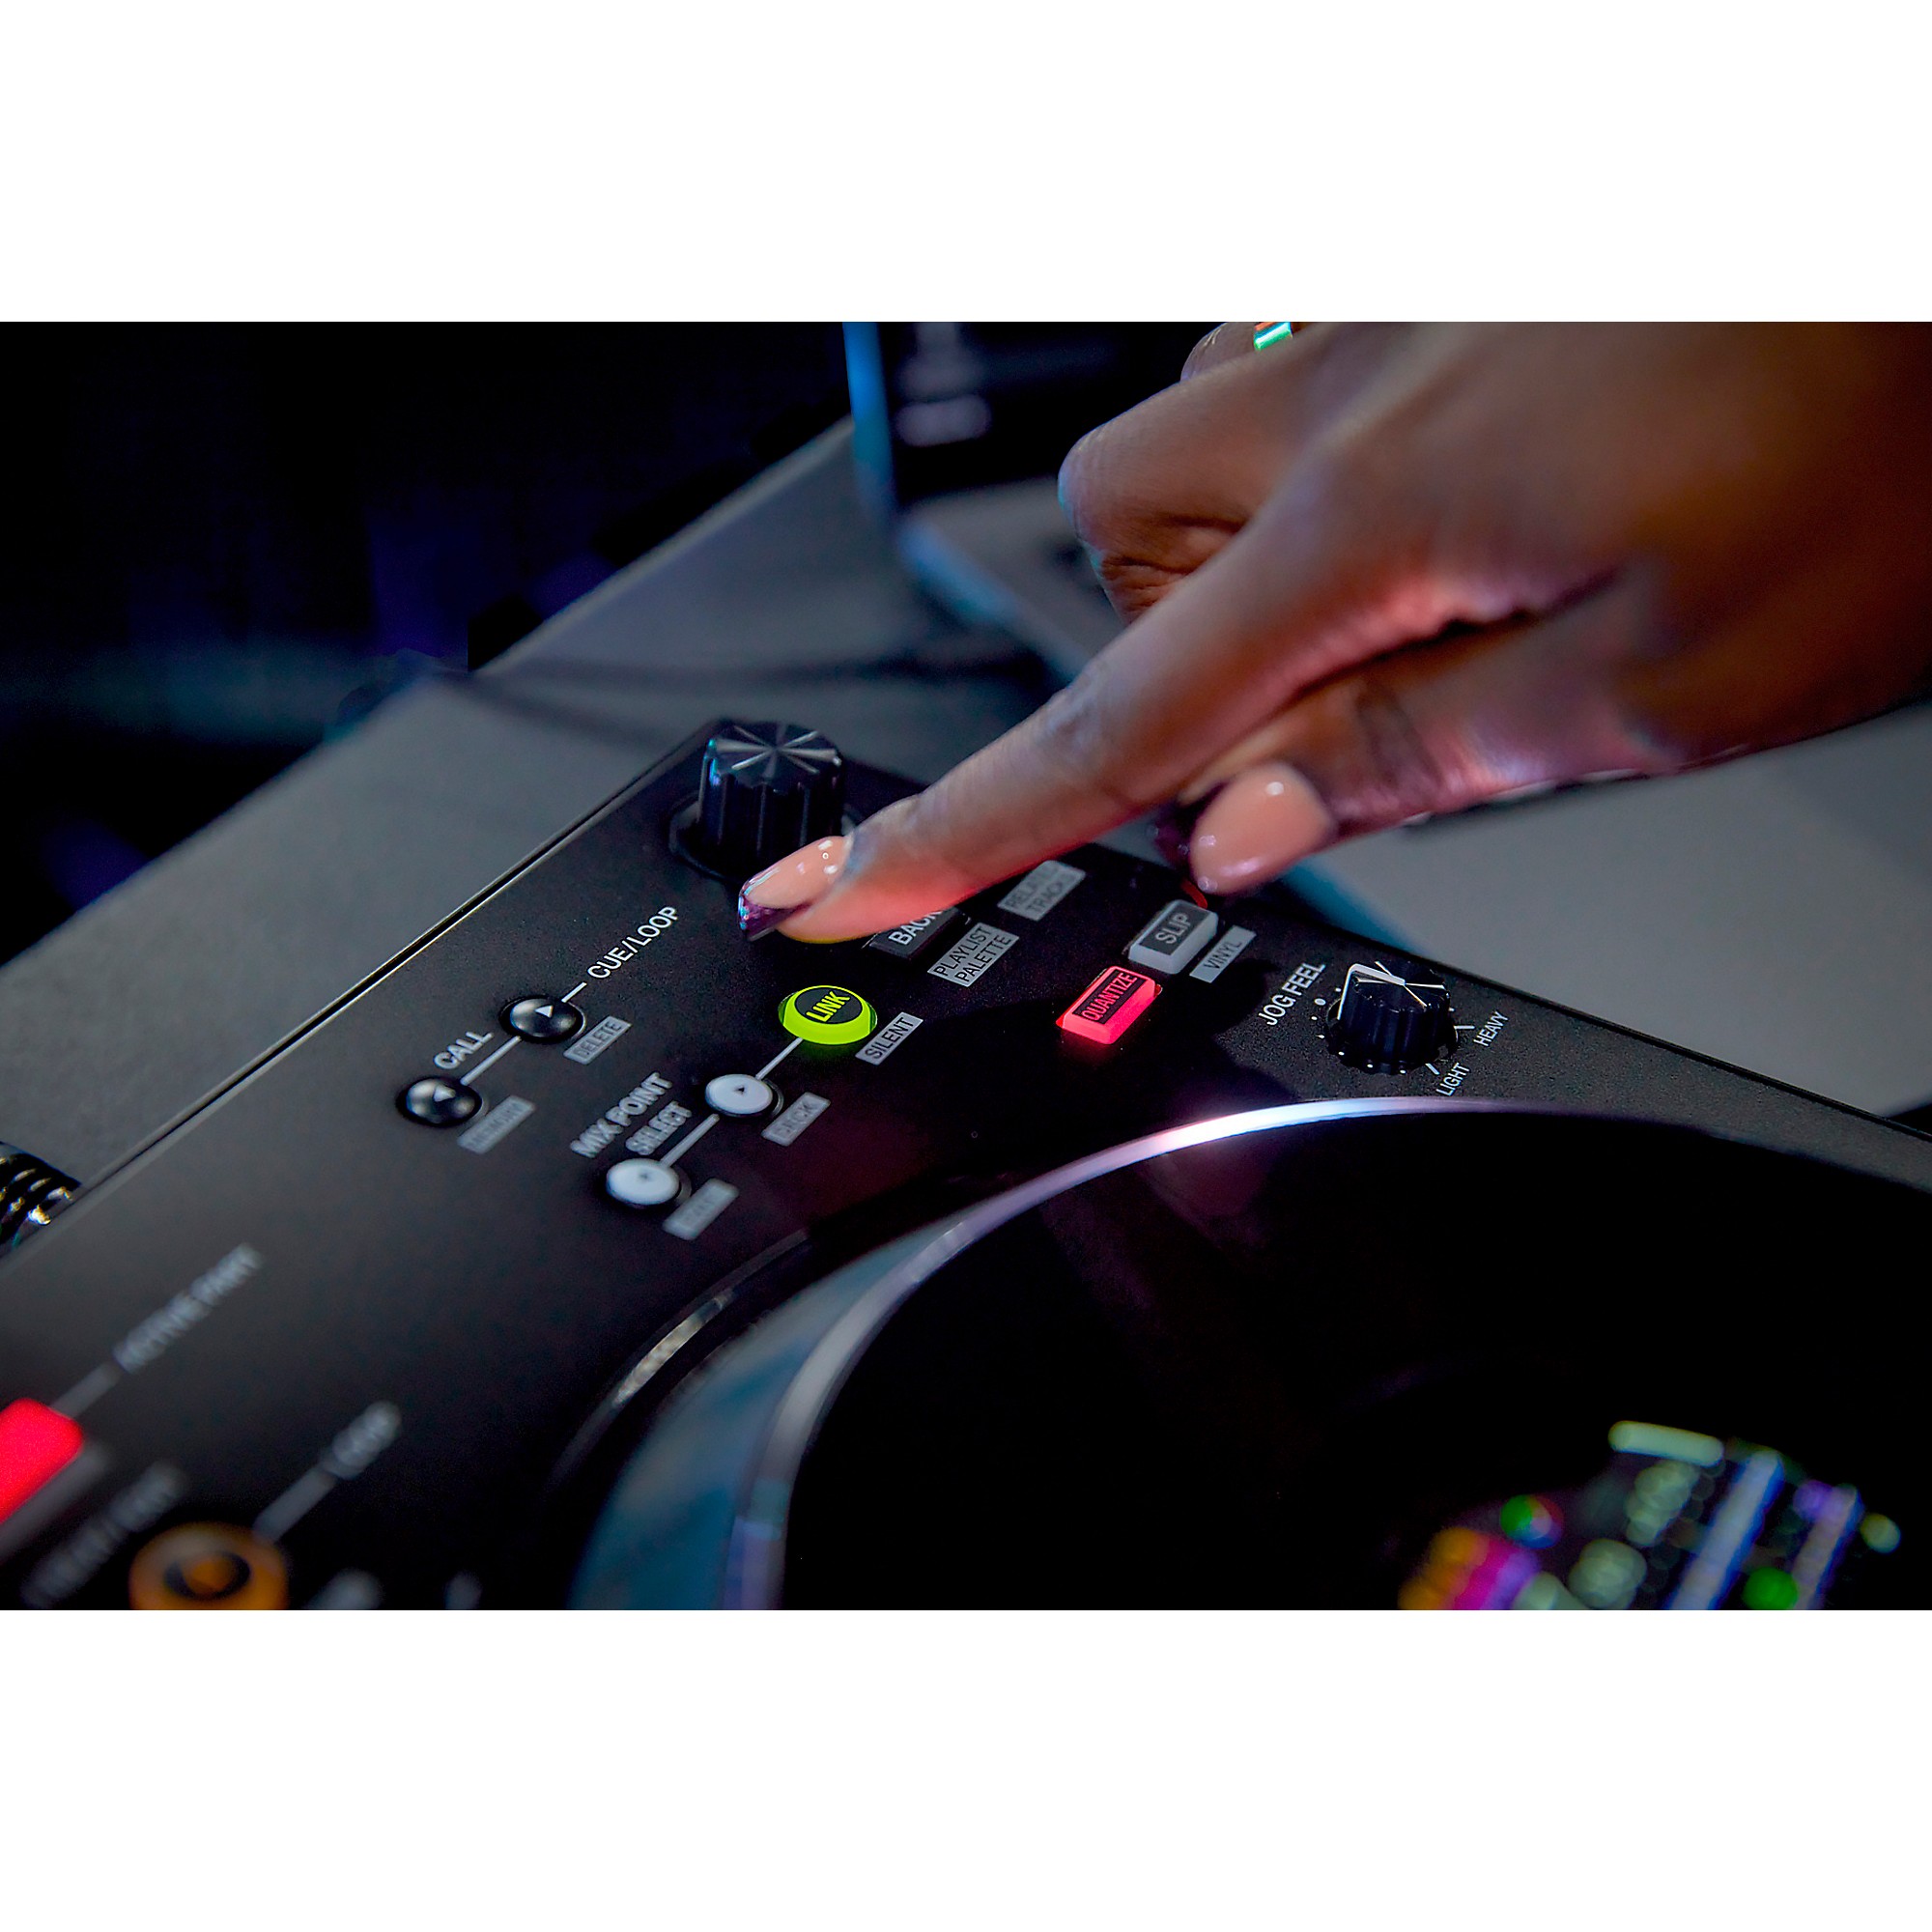 Gemini Sound: DJ Controllers for Creative Freedom